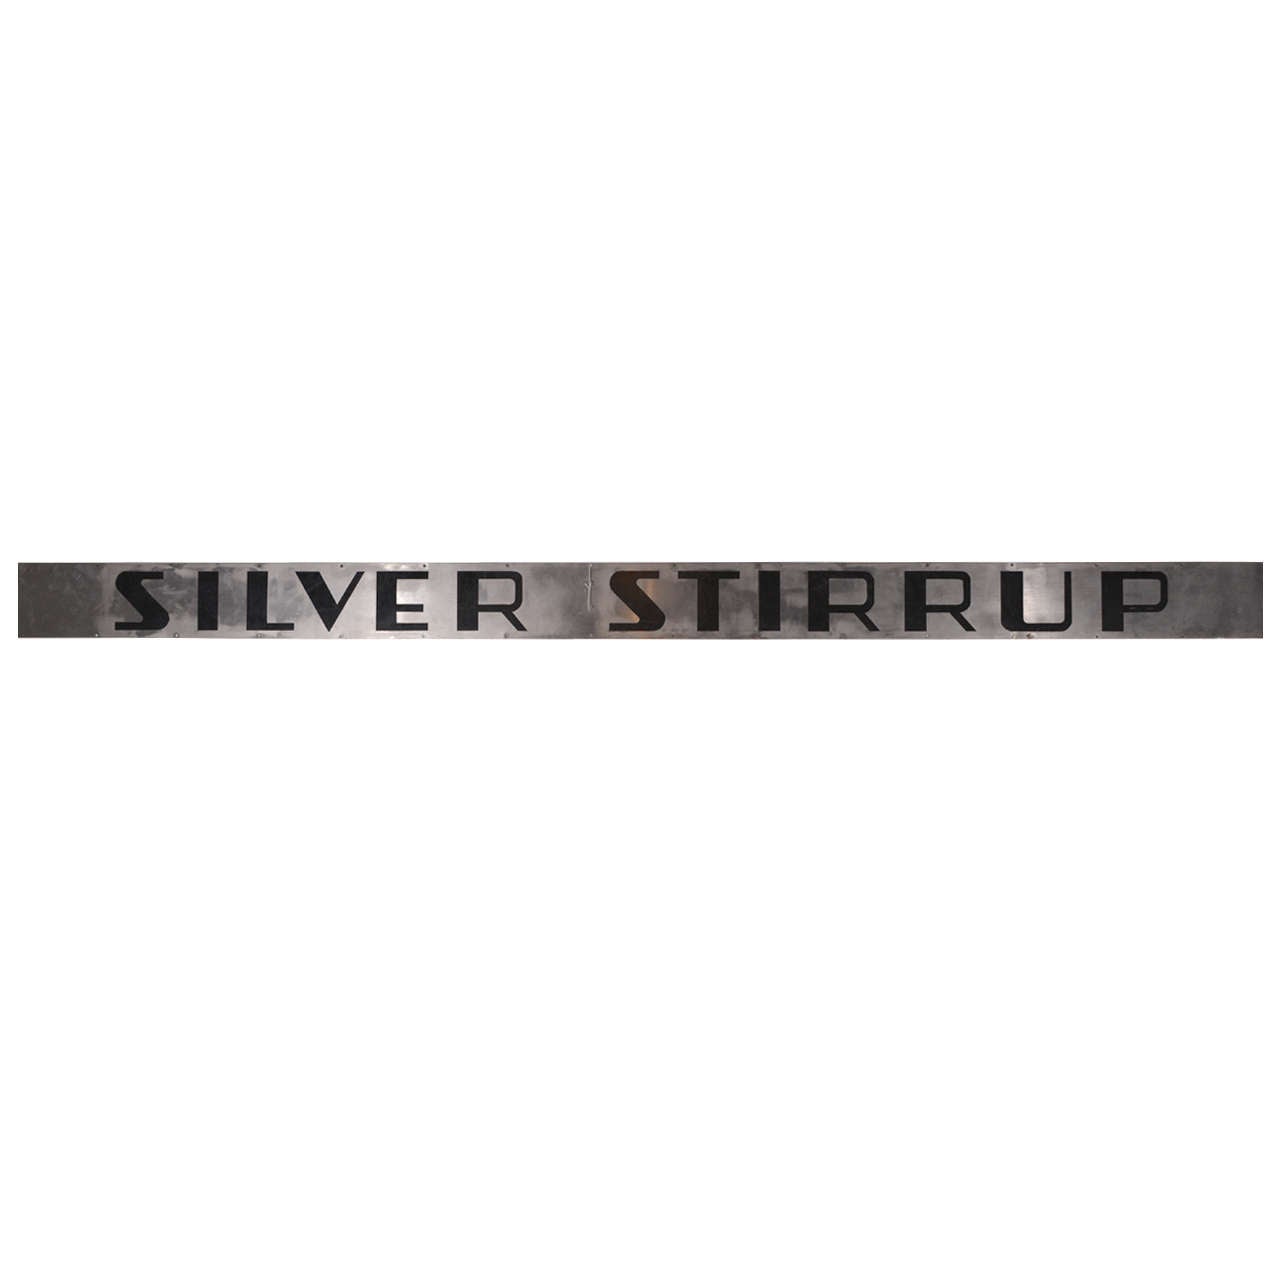 Silver Stirrup Nameplate From Original California Vista Dome Zephyr train coach For Sale